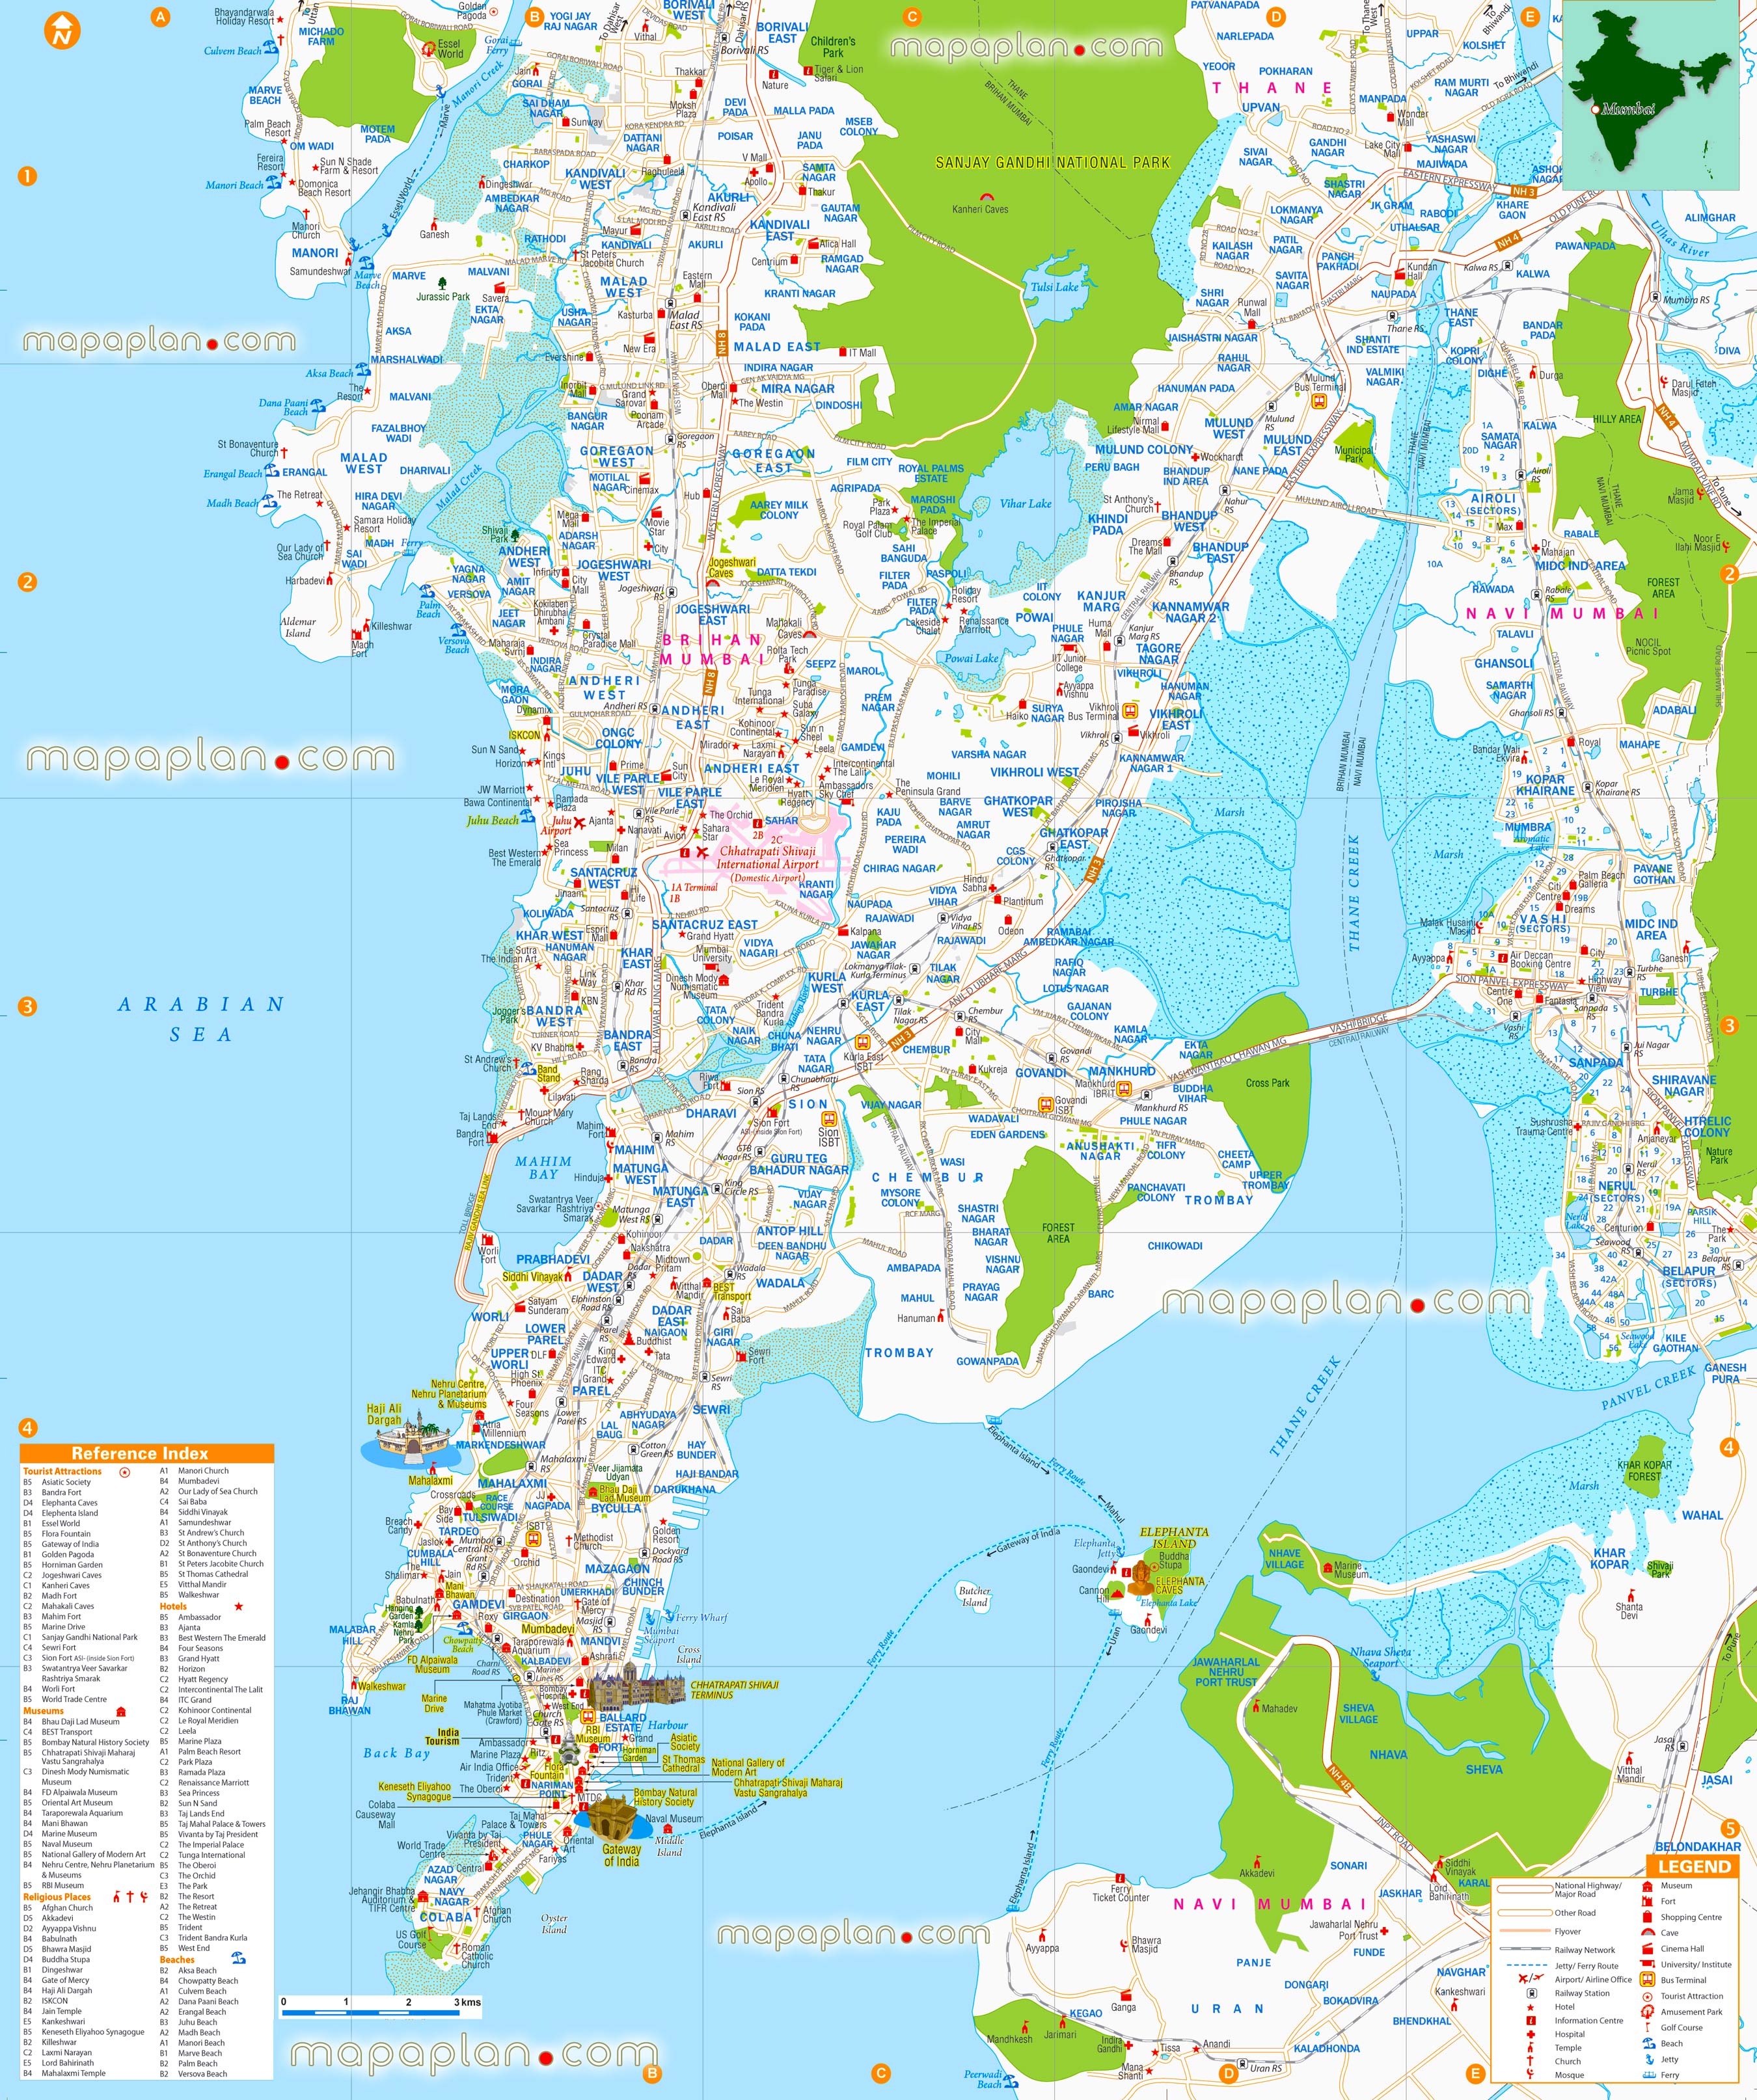 Mumbai map  Mumbai, India virtual interactive 3d detailed 